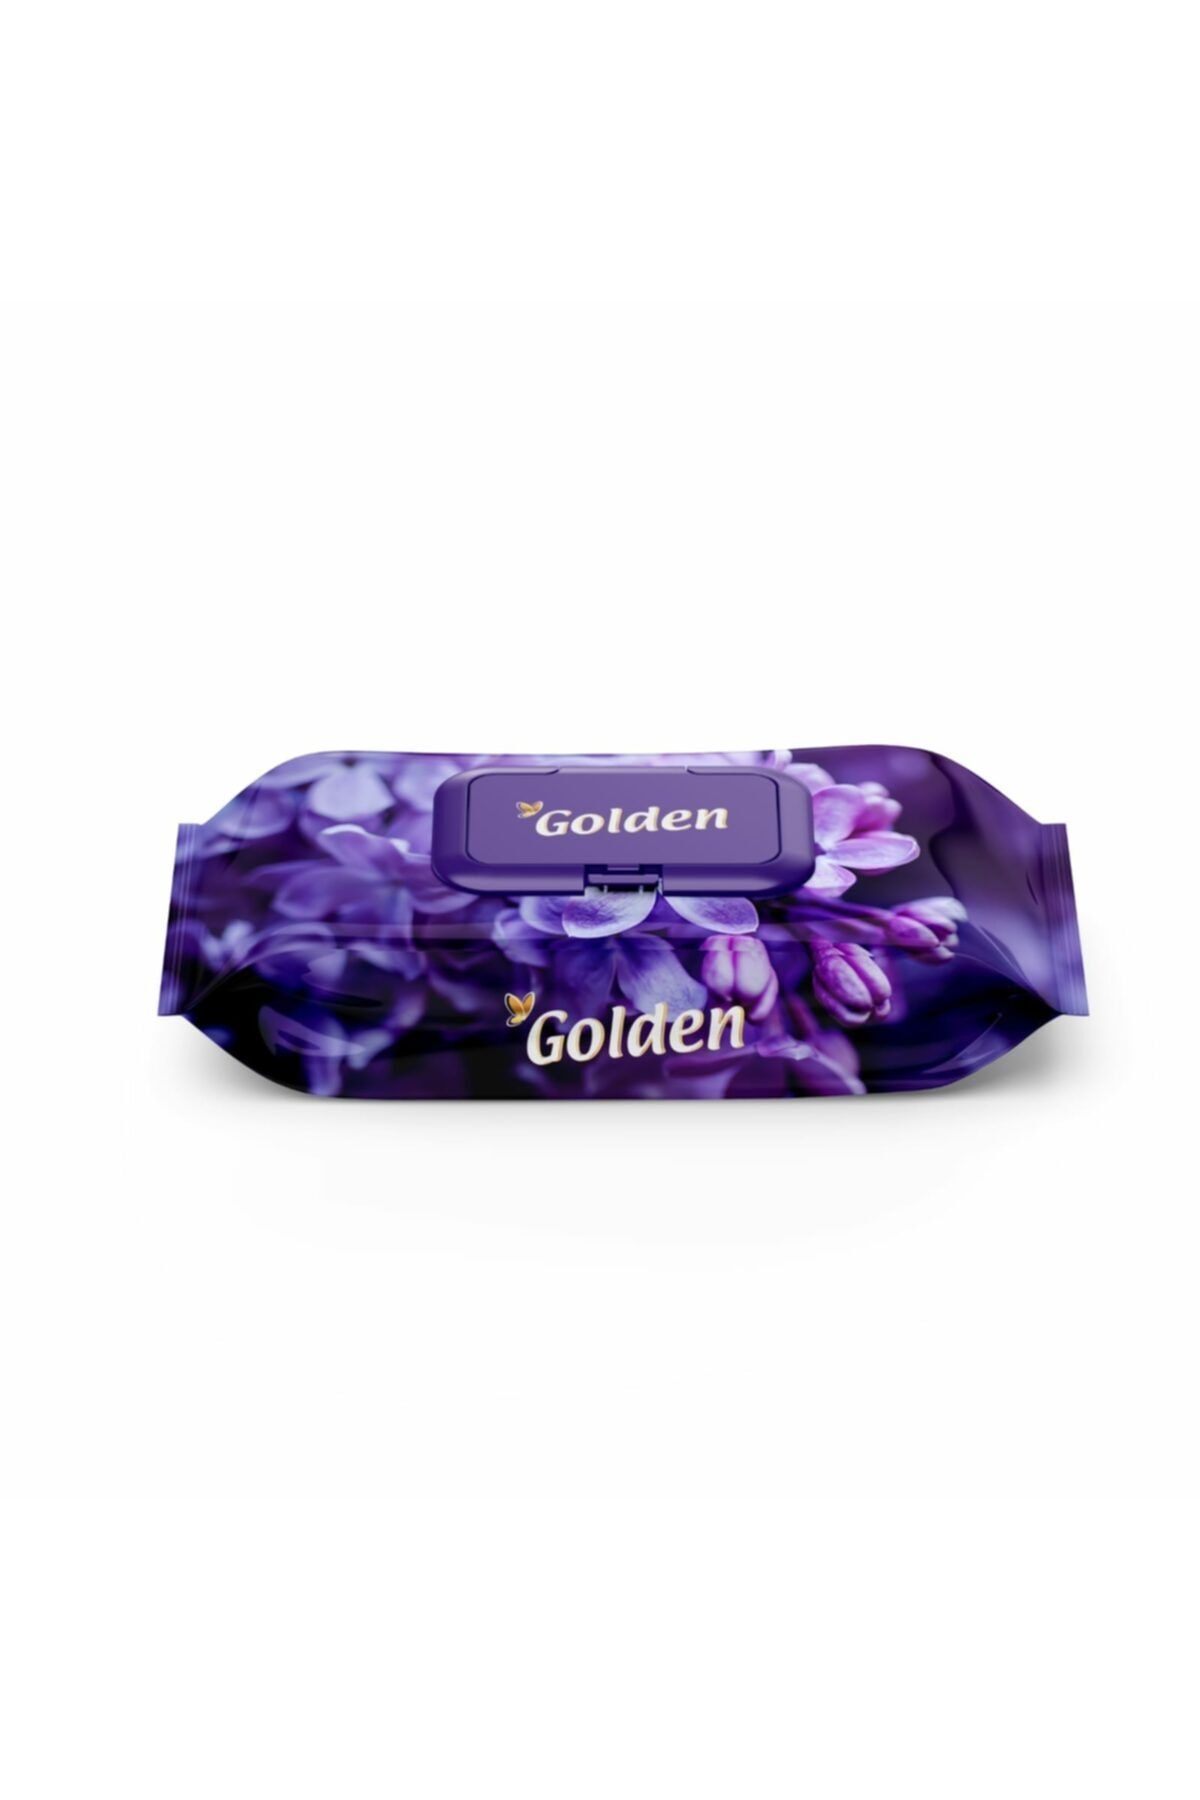 Golden Violet Islak Mendil 12x120 1440 Yaprak (1koli)